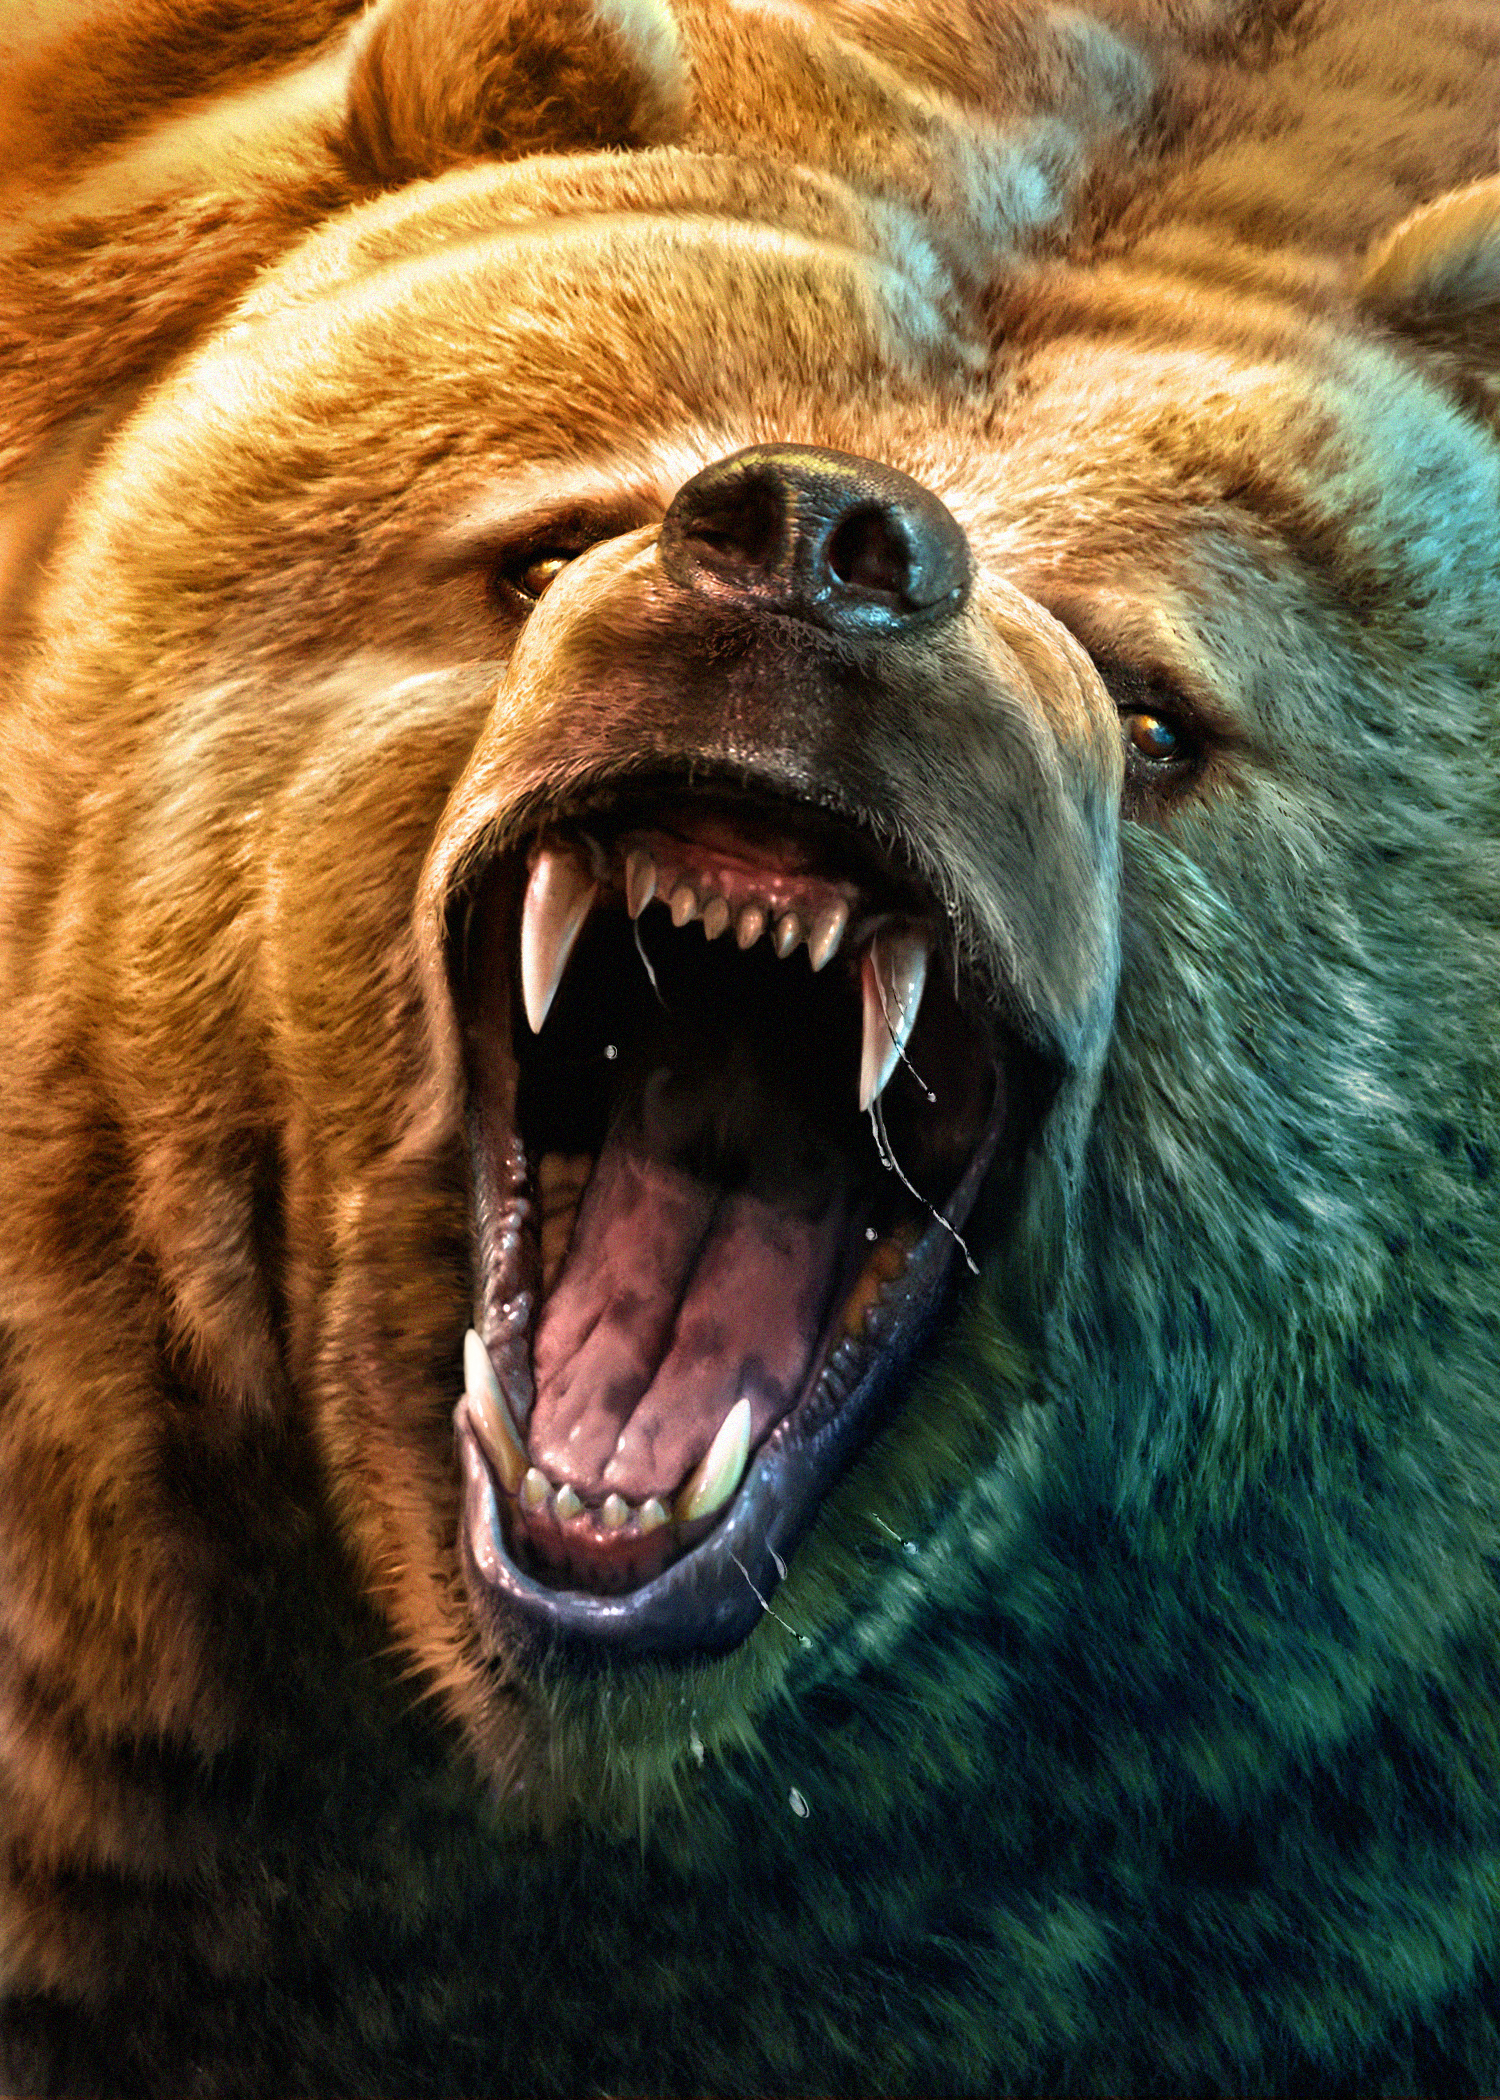 Заставки оскал. Медведь Гризли оскал. Грозный медведь Гризли. Медведь Гризли злой. Гризли Беар.